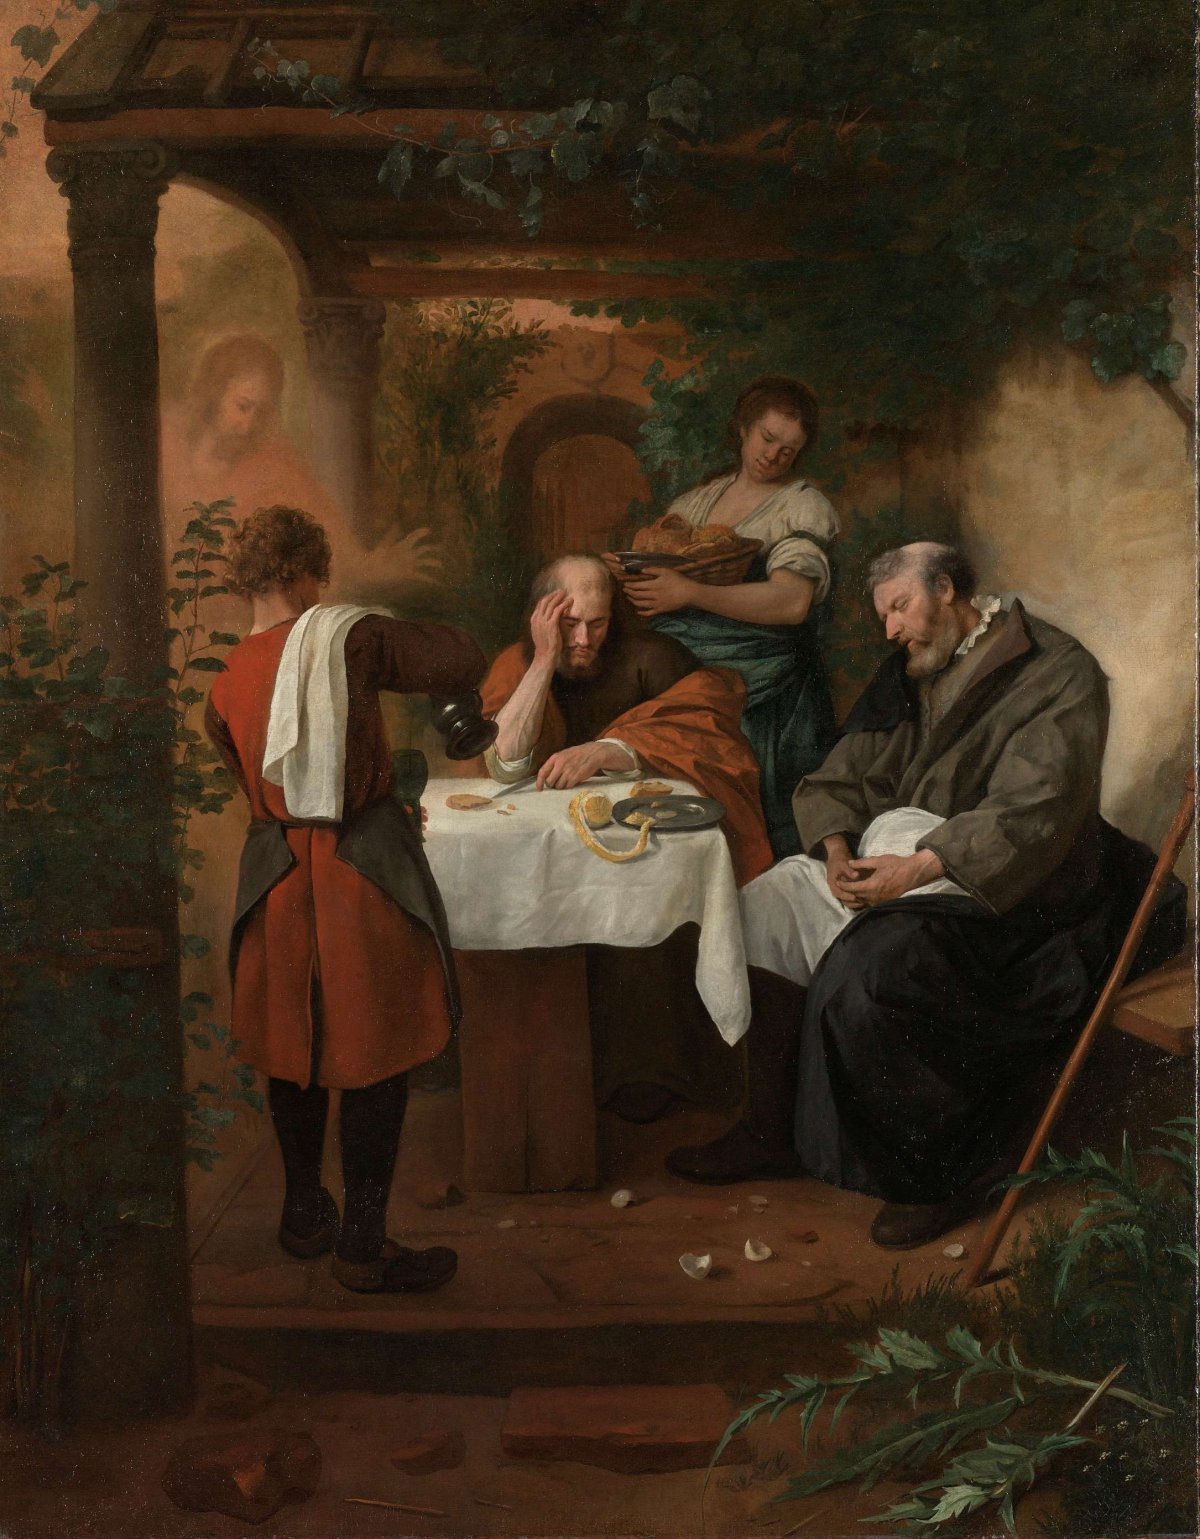 Supper at Emmaus, Jan Havicksz. Steen, c. 1665 - c. 1668